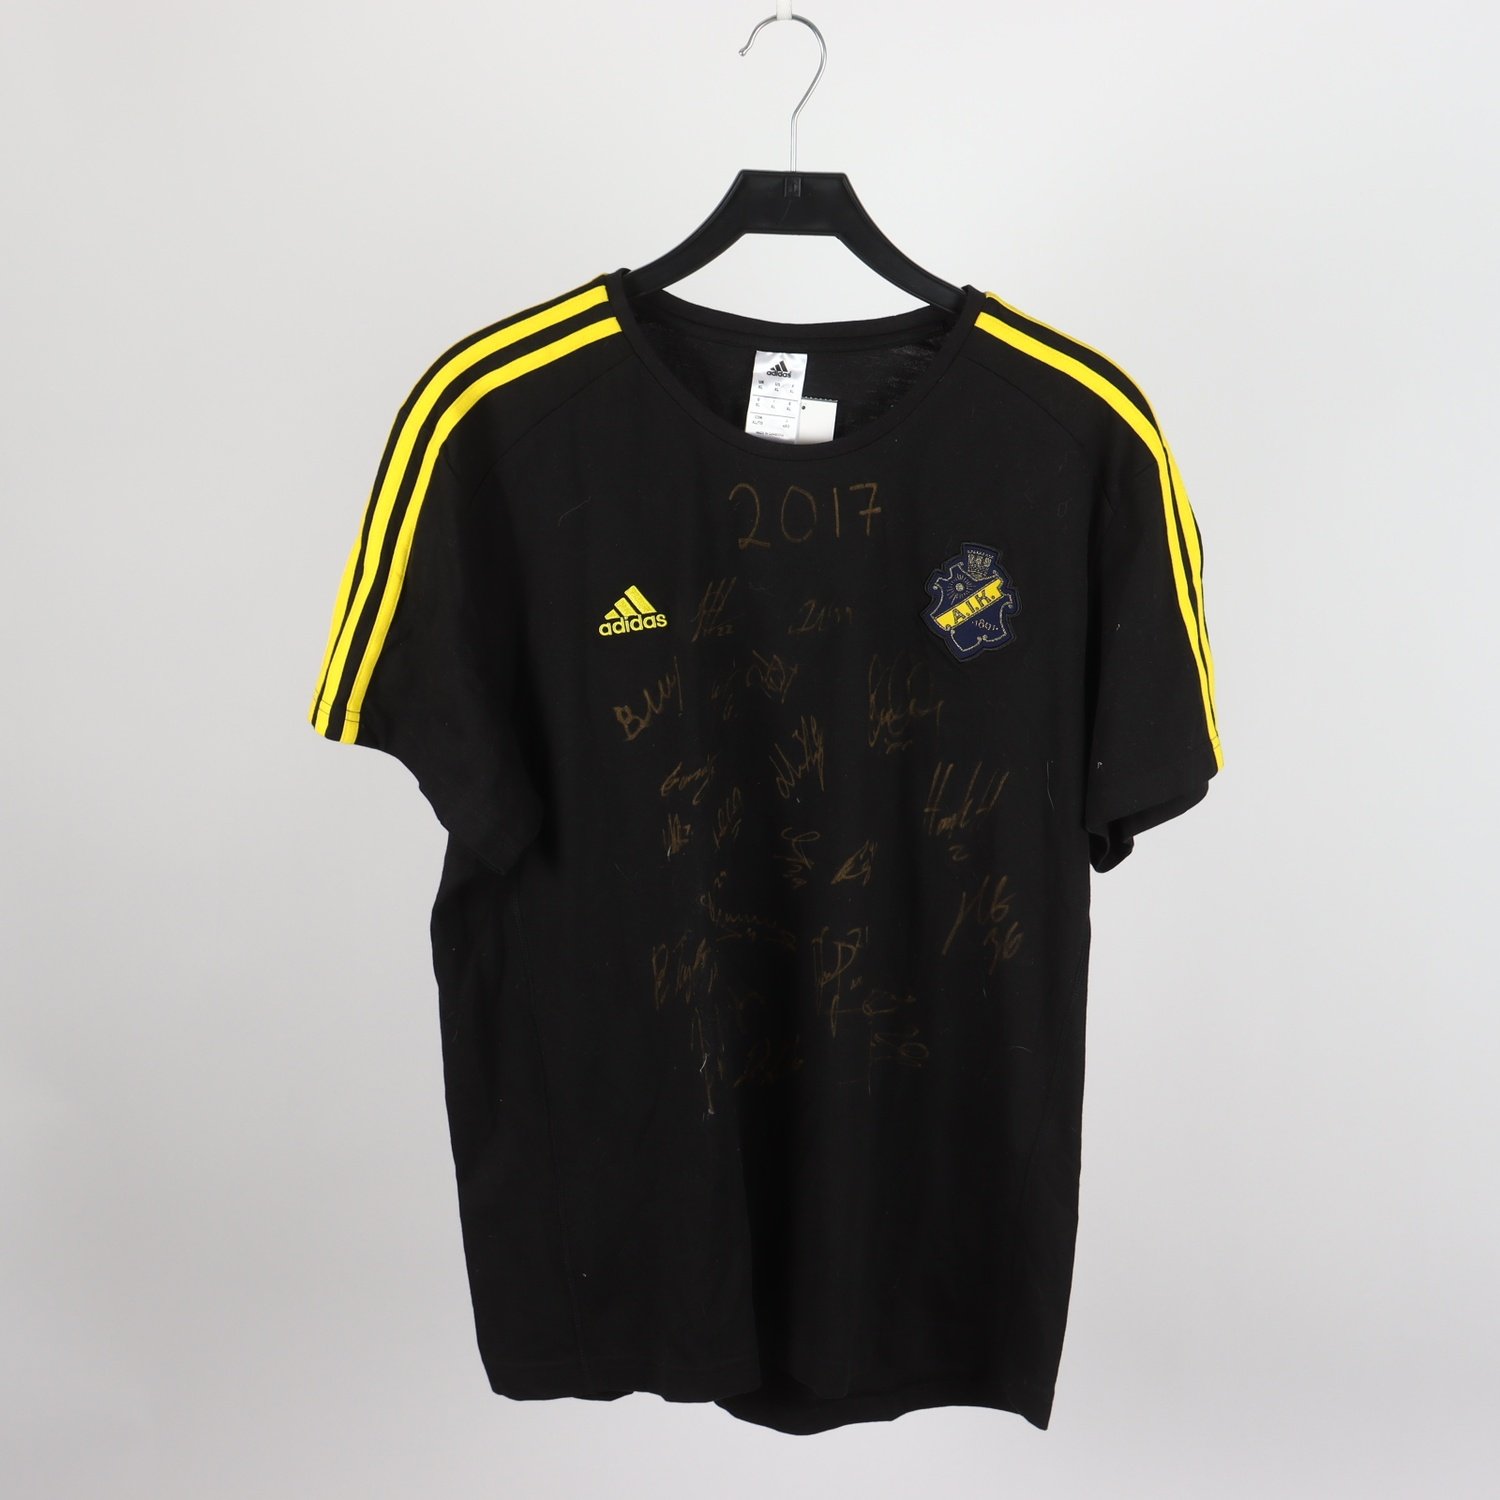 T-shirt, Adidas, AIK, vit, svart, autografer, stl. XL